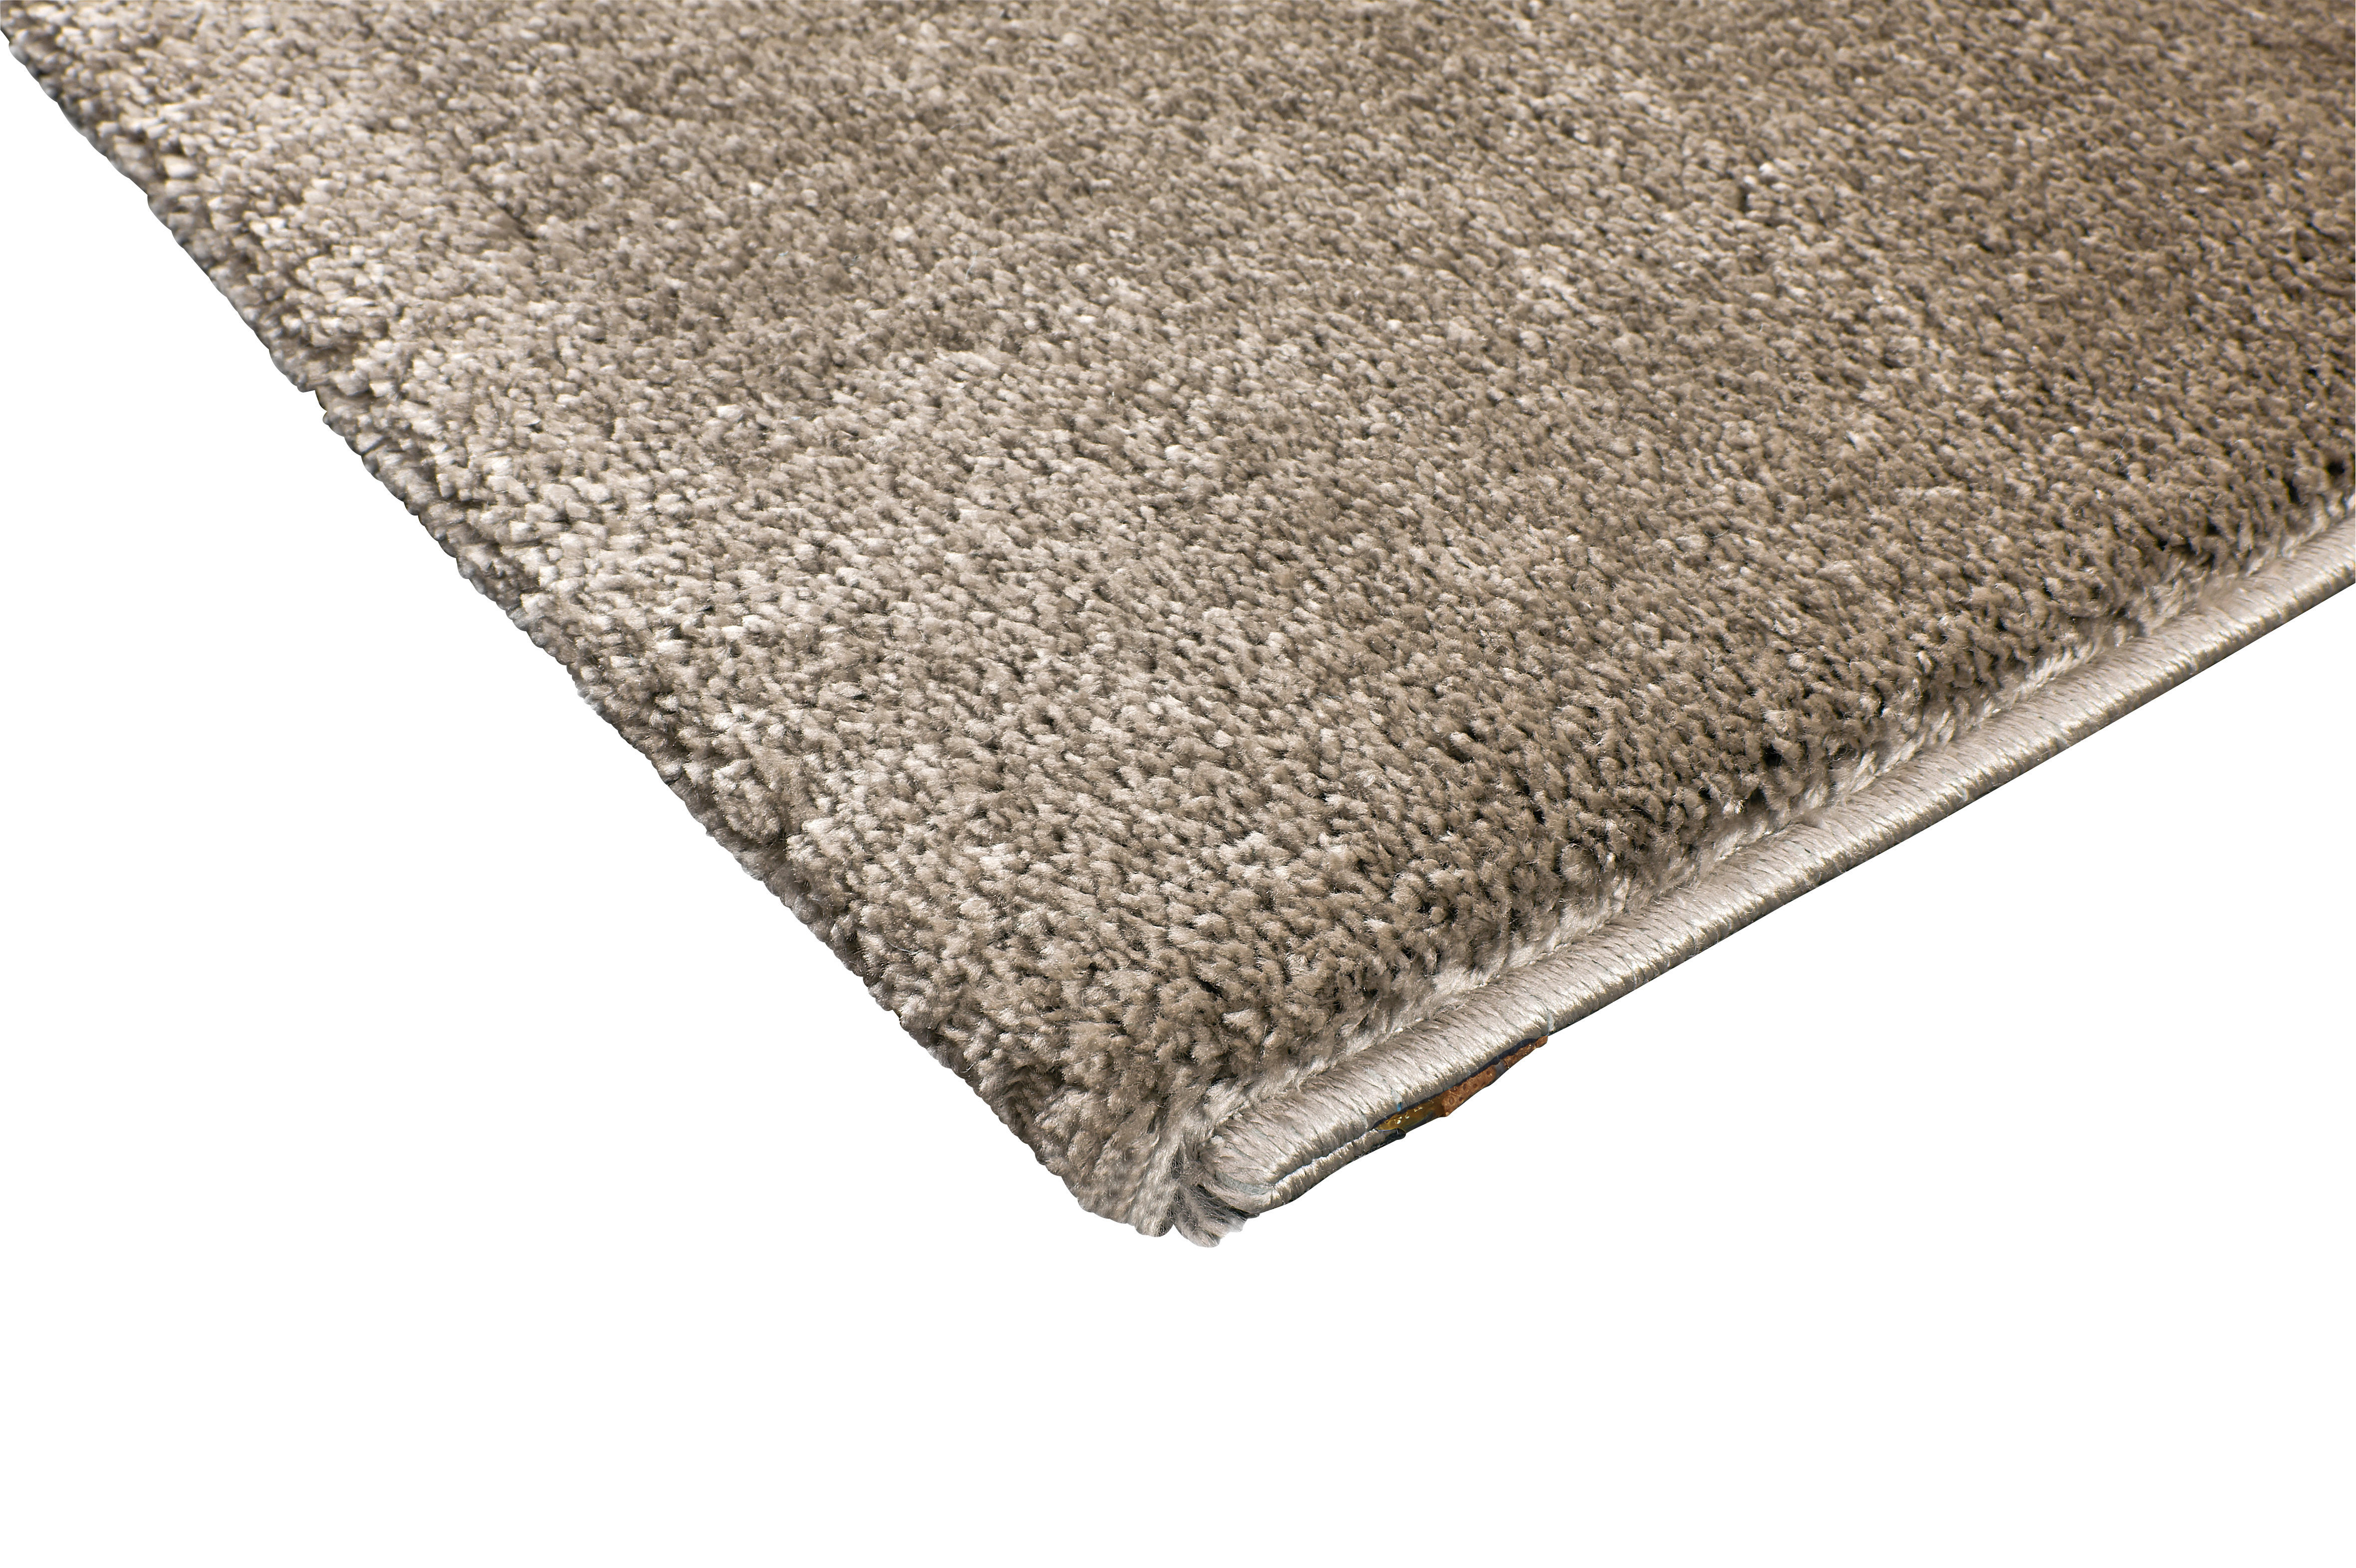 Teppich Valentino sand B/L: ca. 120x170 cm Valentino - sand (120,00/170,00cm)